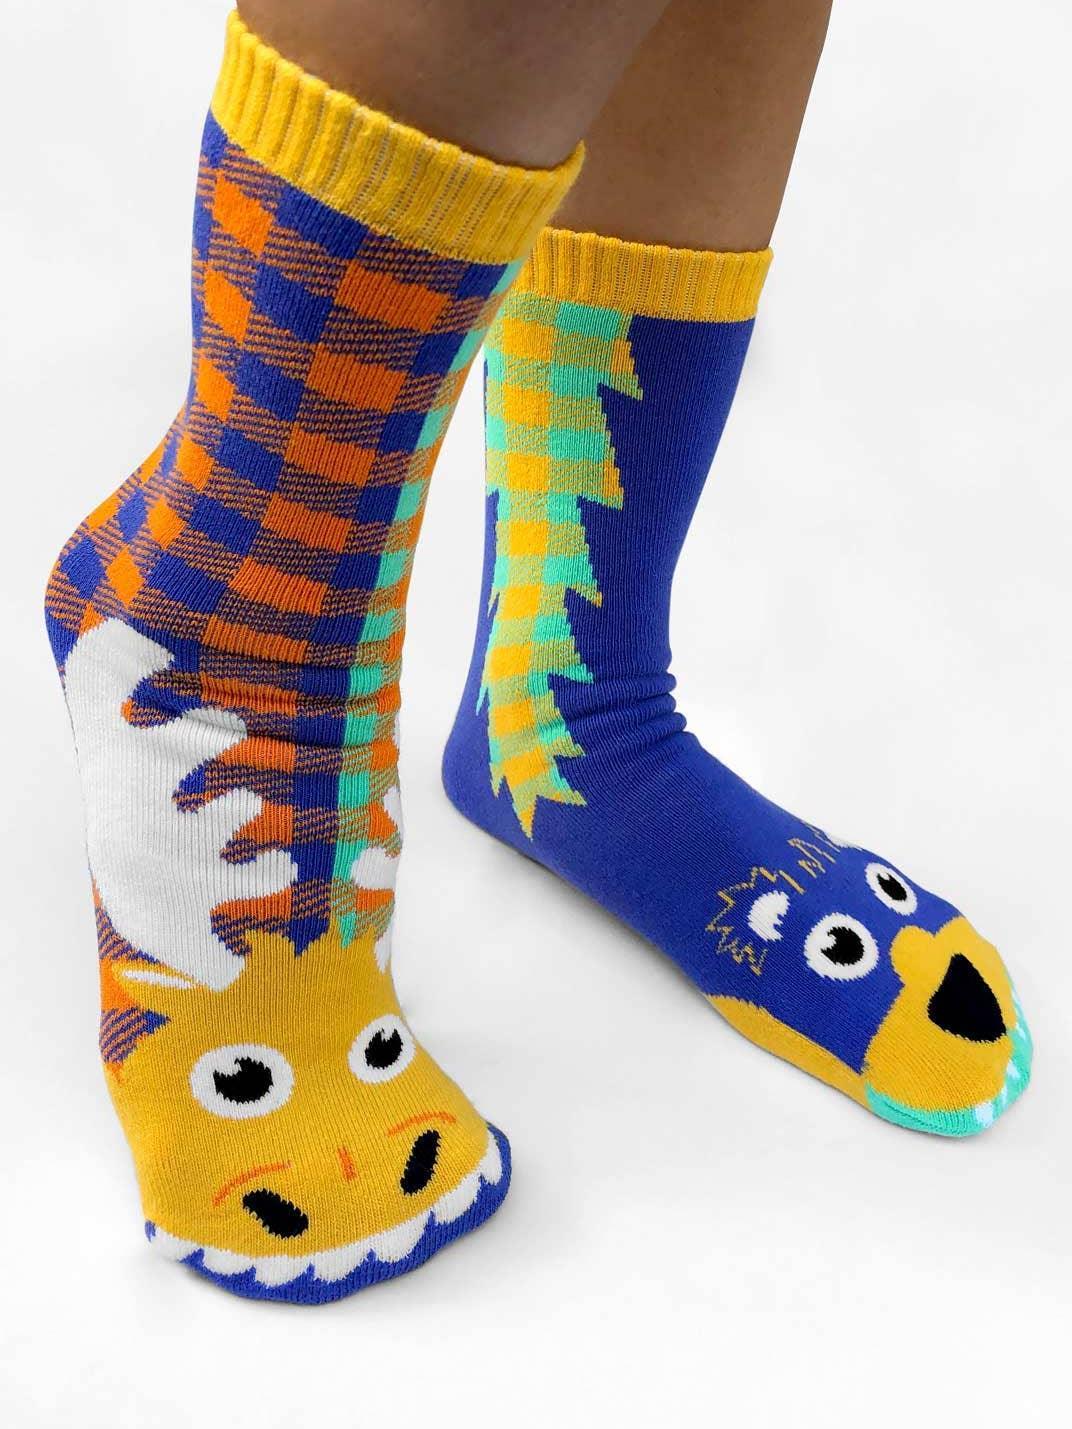 Moose & Bear | Adult Socks | Mismatched Cute Crazy Fun Socks - Pals Socks - The Sock Monster